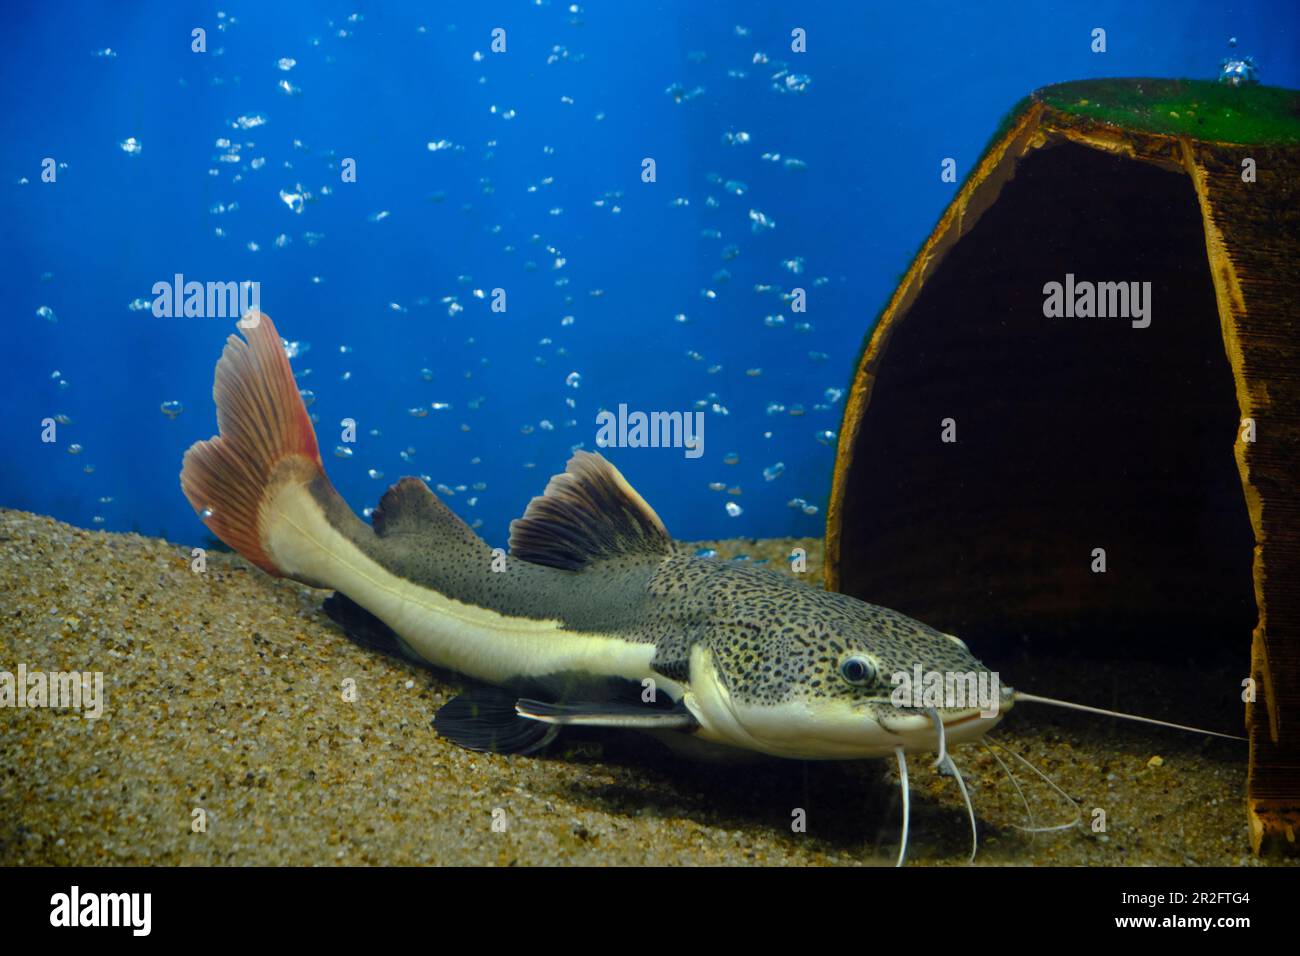 https://c8.alamy.com/comp/2R2FTG4/flathead-catfish-lies-sand-at-bottom-aquarium-with-blue-background-2R2FTG4.jpg